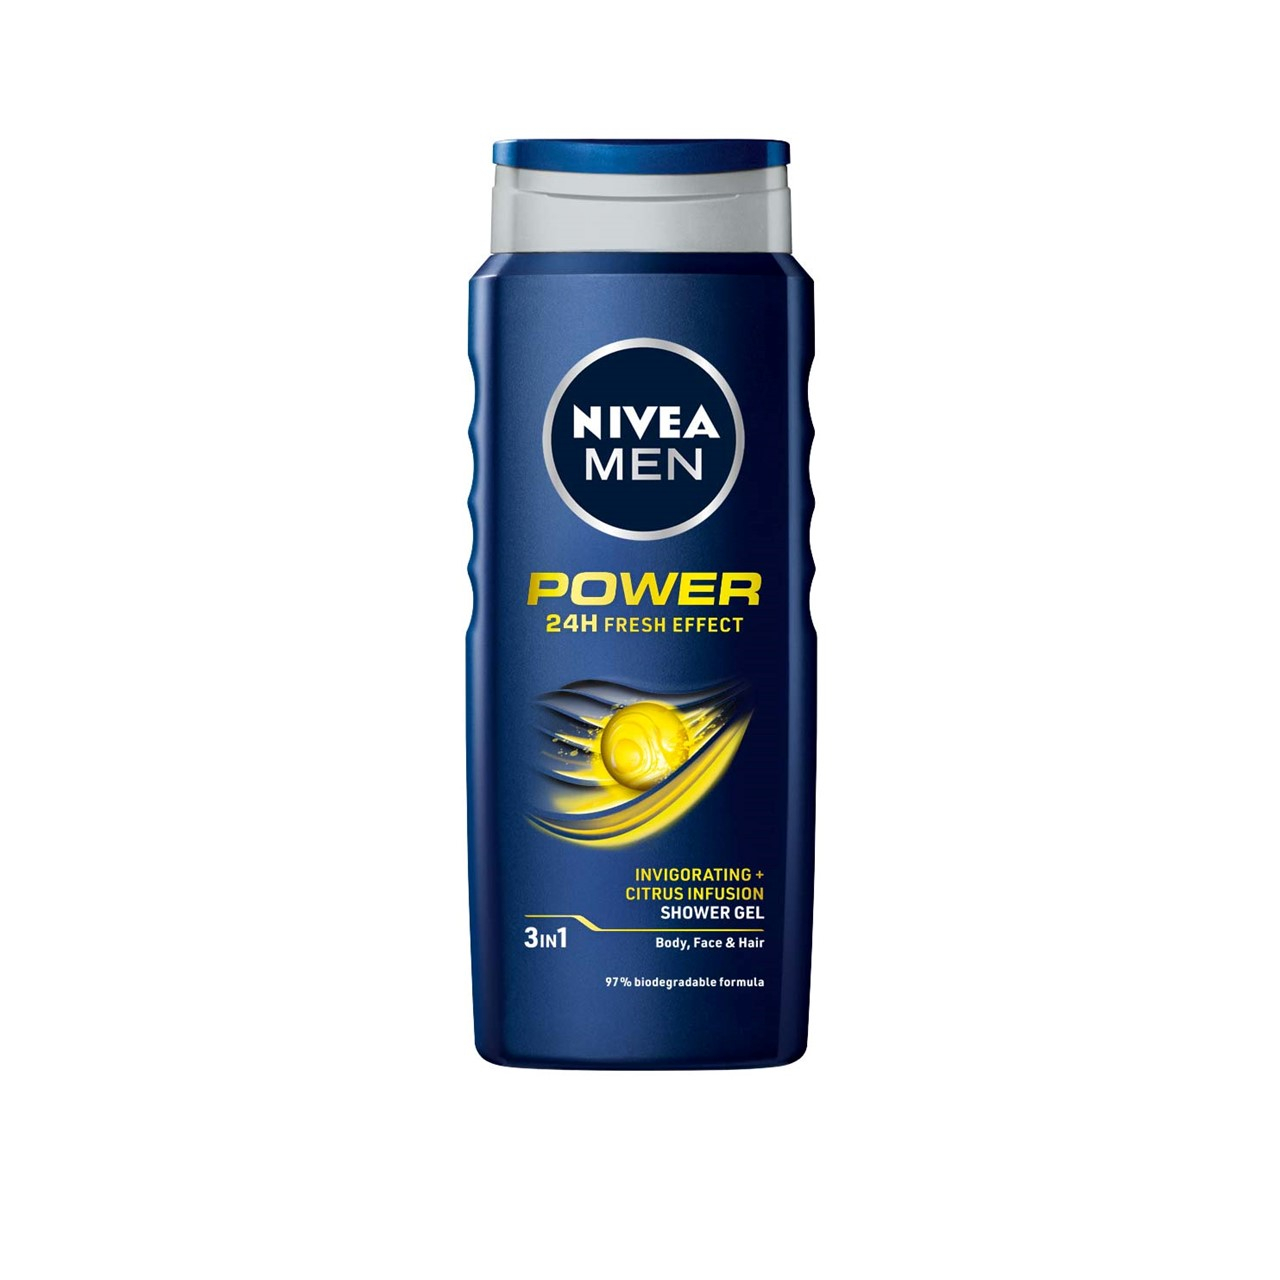 Nivea Men Power 24h Fresh Effect 3in1 Shower Gel 500ml (16.91fl oz)